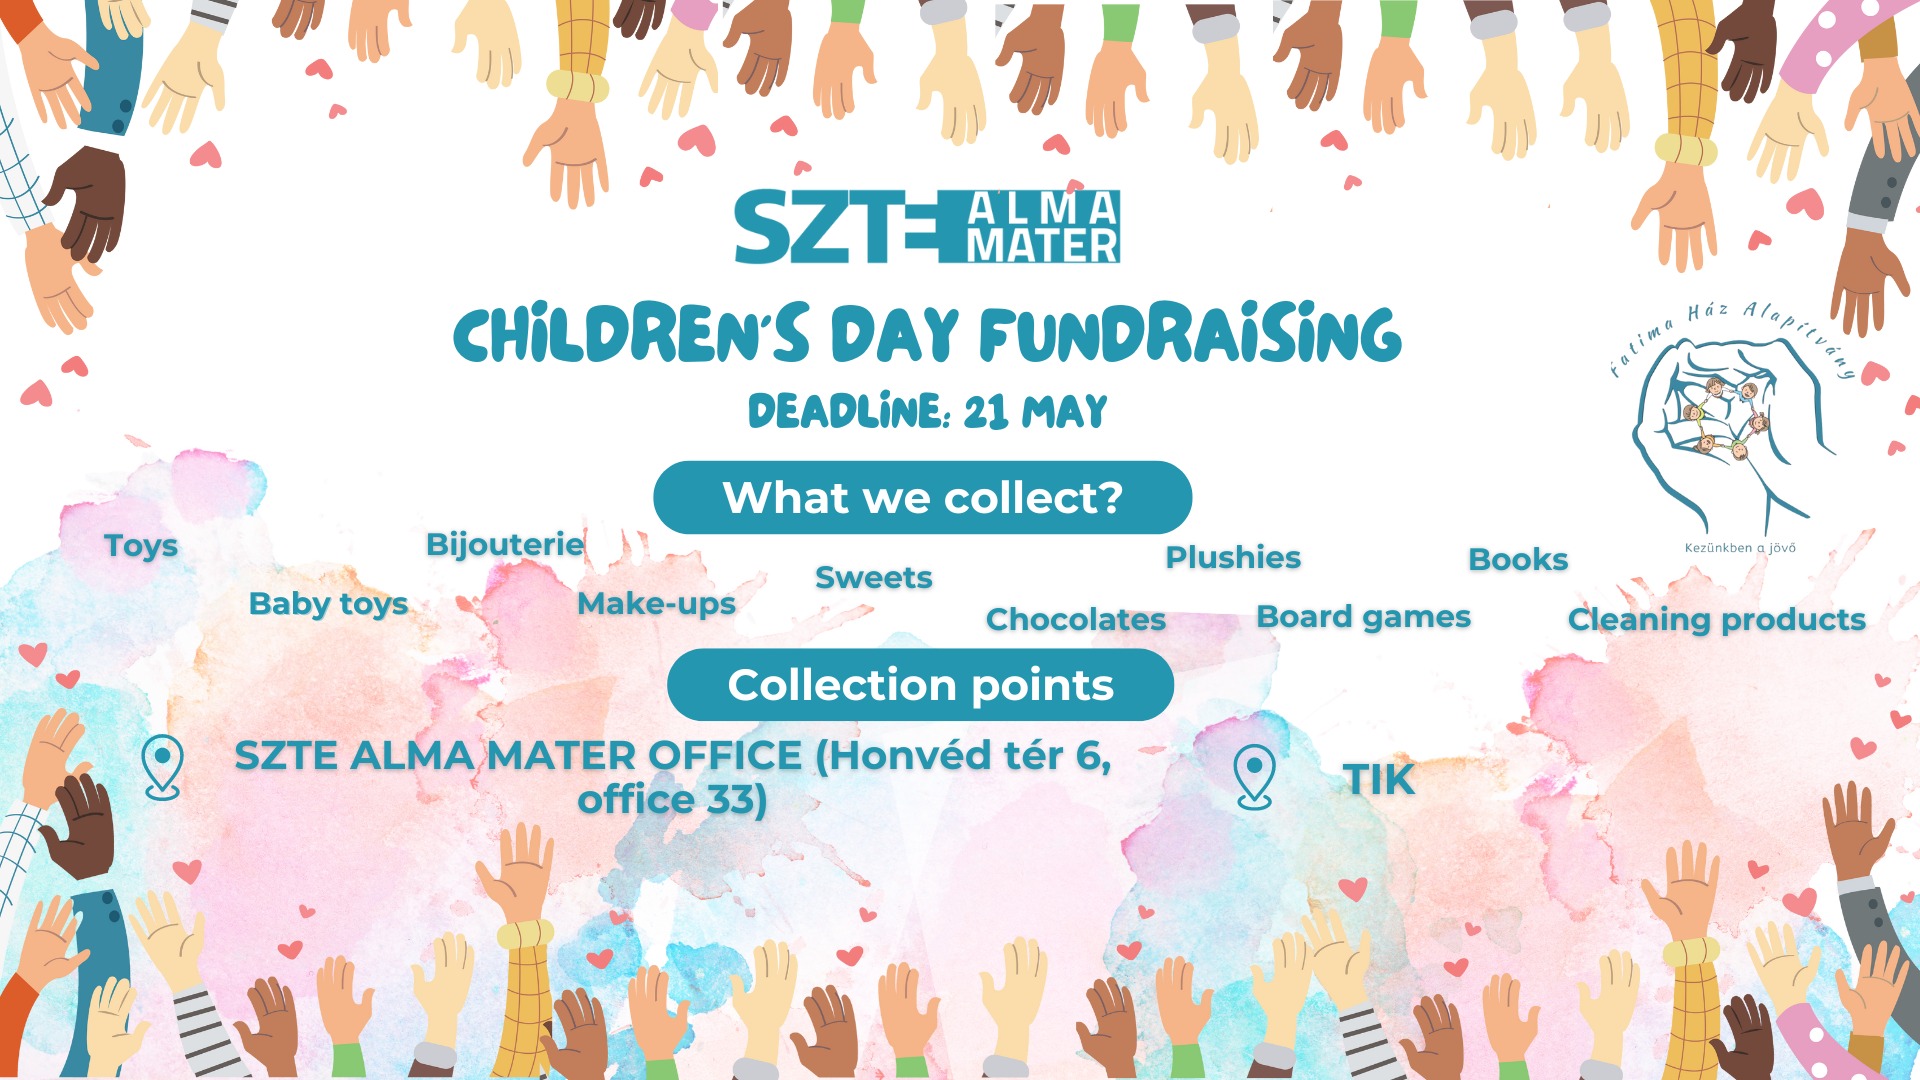 Children's Day fundraising